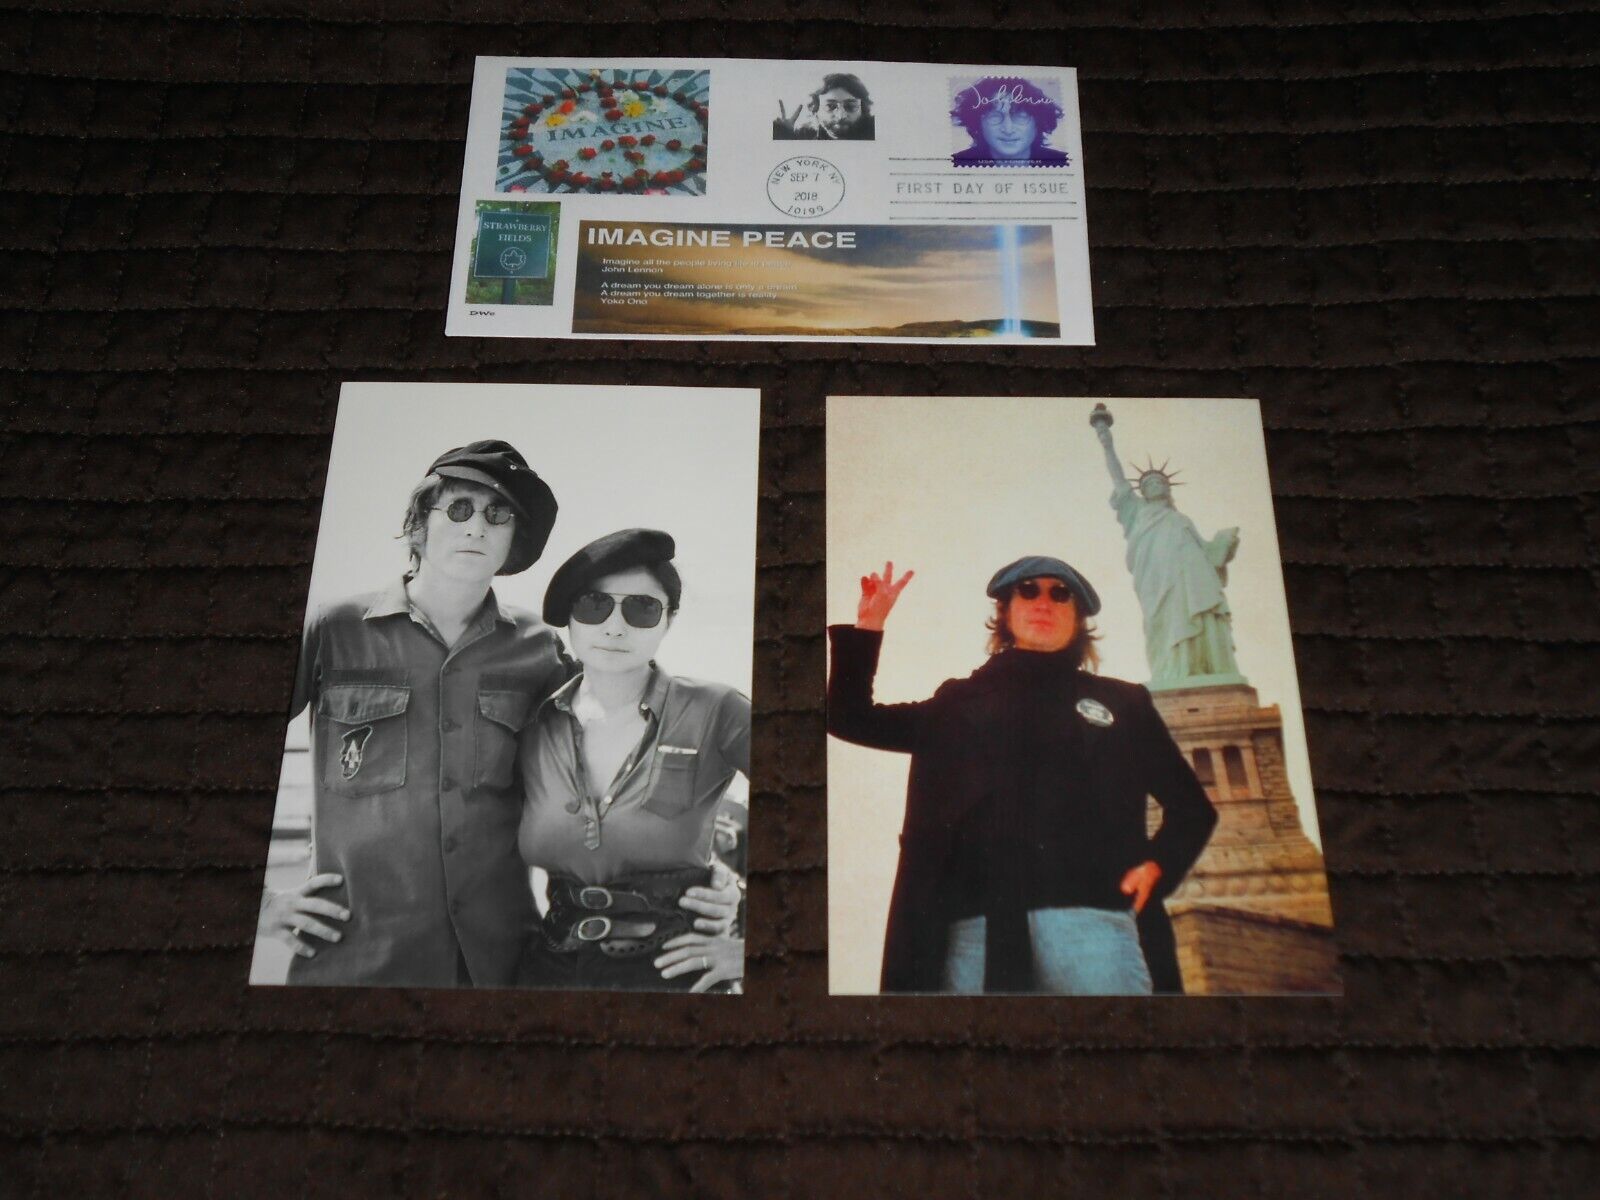 JOHN LENNON & YOKO ONO POSTCARDS+JOHN LENNON  #5314 FDC W/ IMAGINE PEACE CACHET